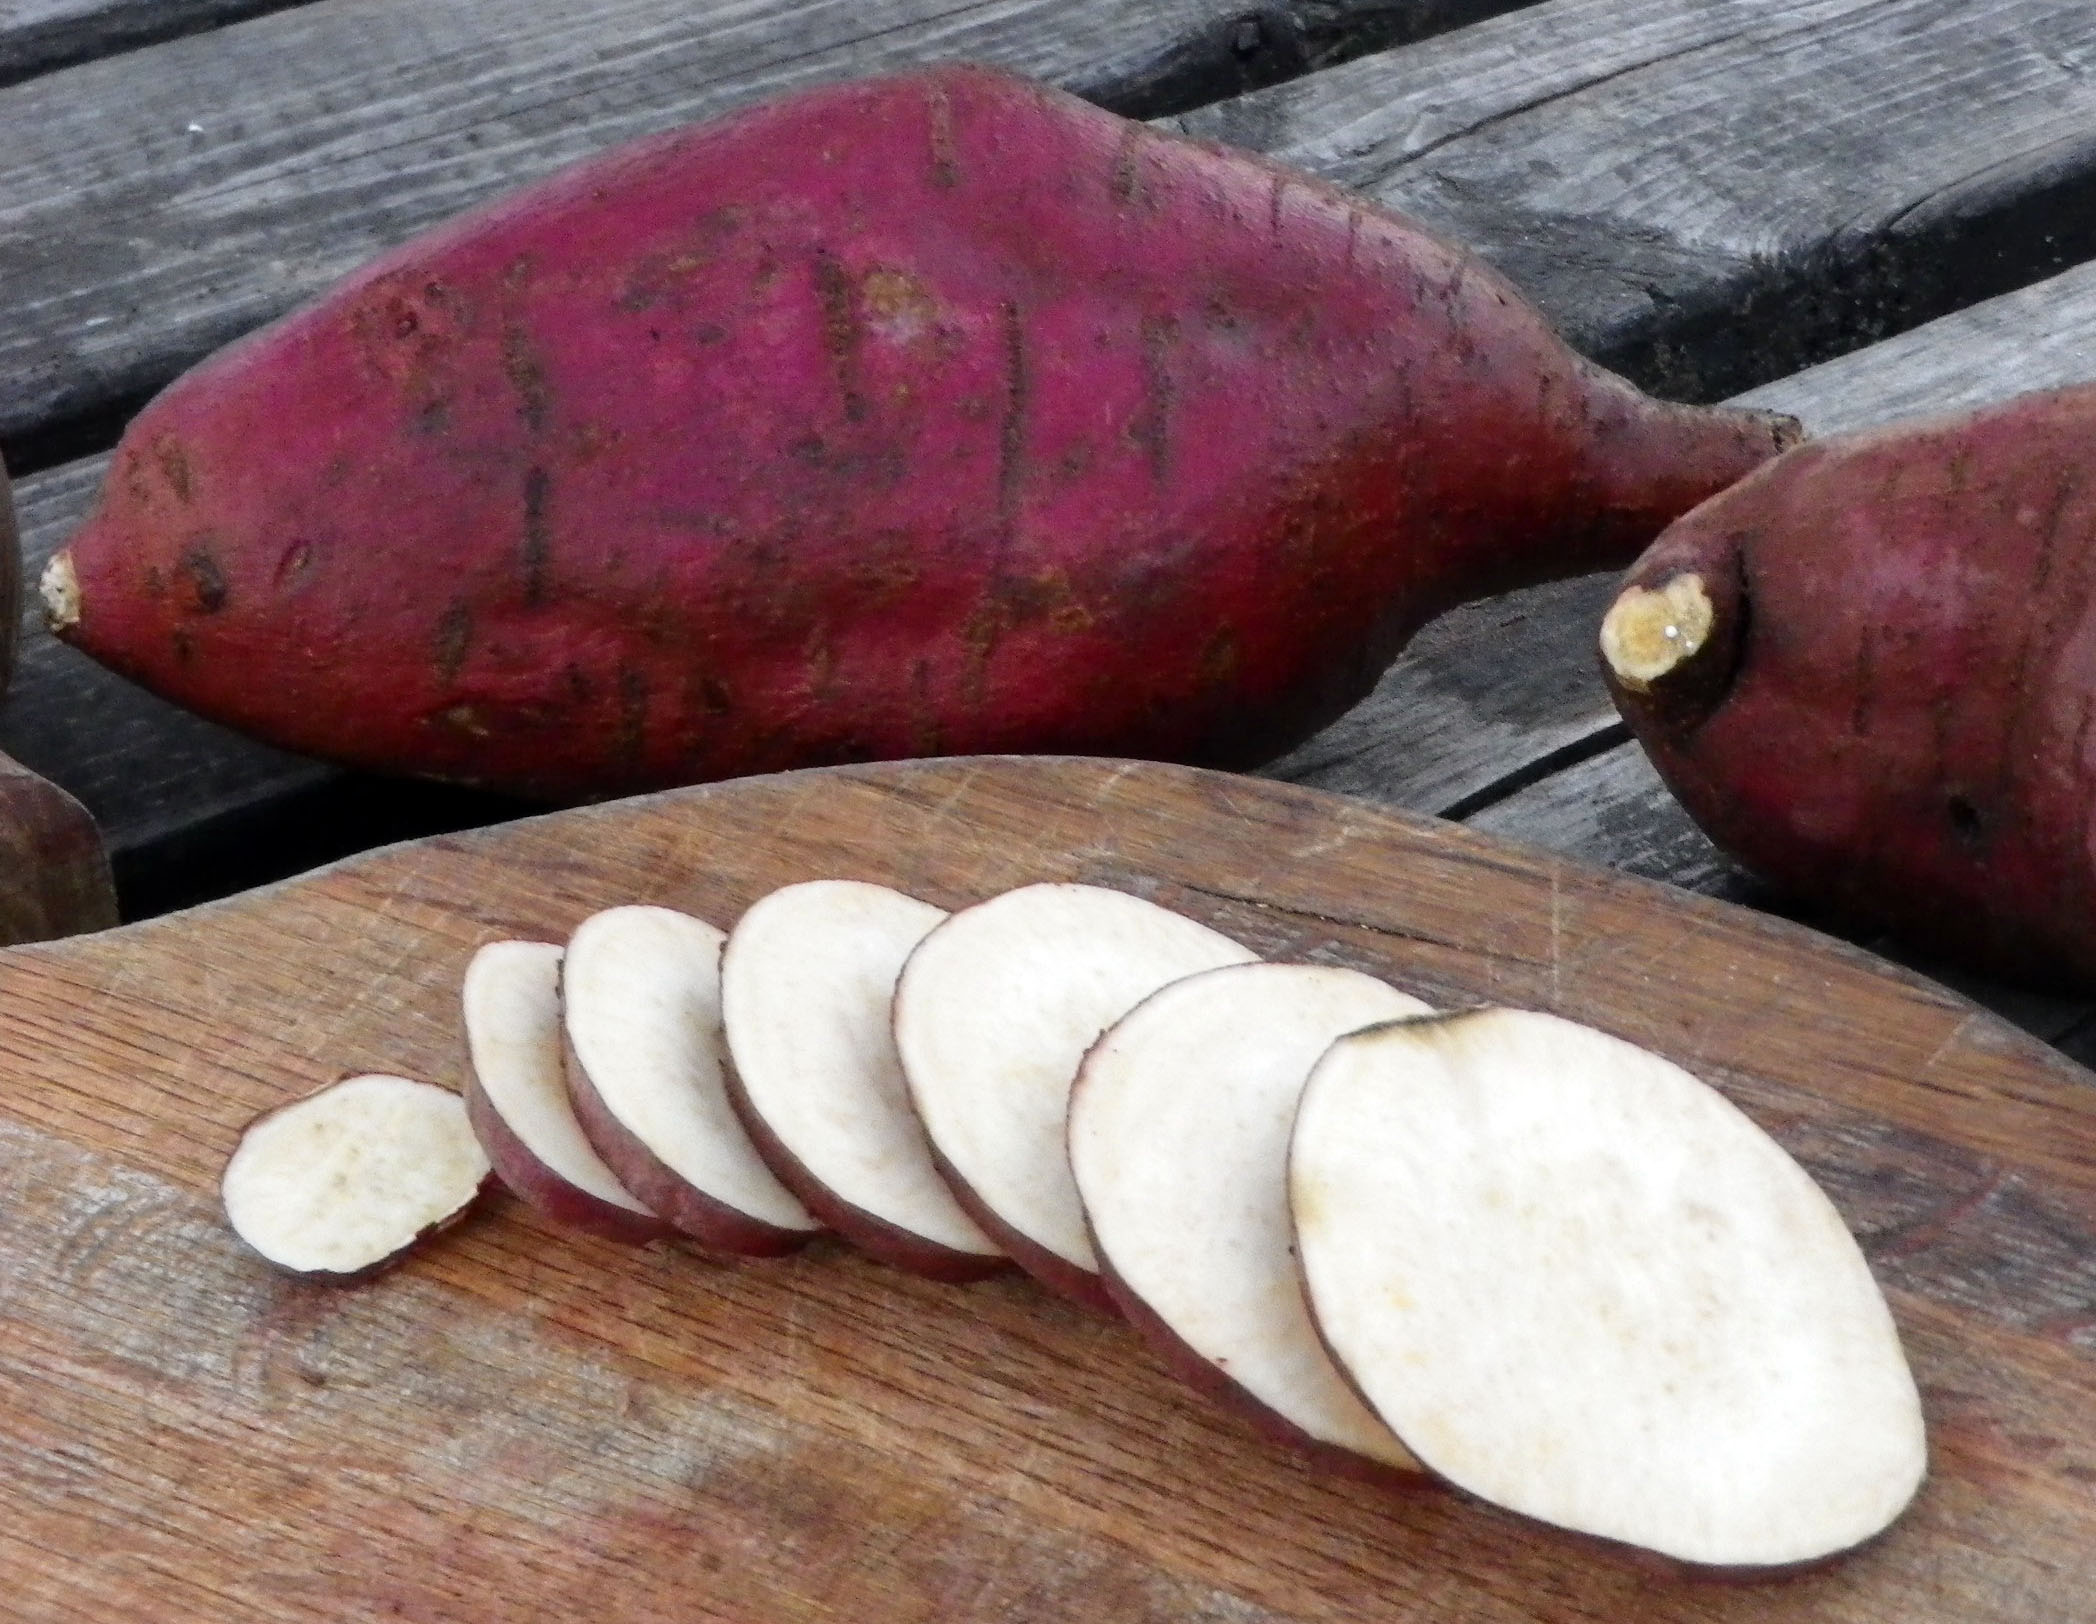 Sweet Potato Vine Tattoo - Growing Climbers Through Shrubs | Bodrumwasukur